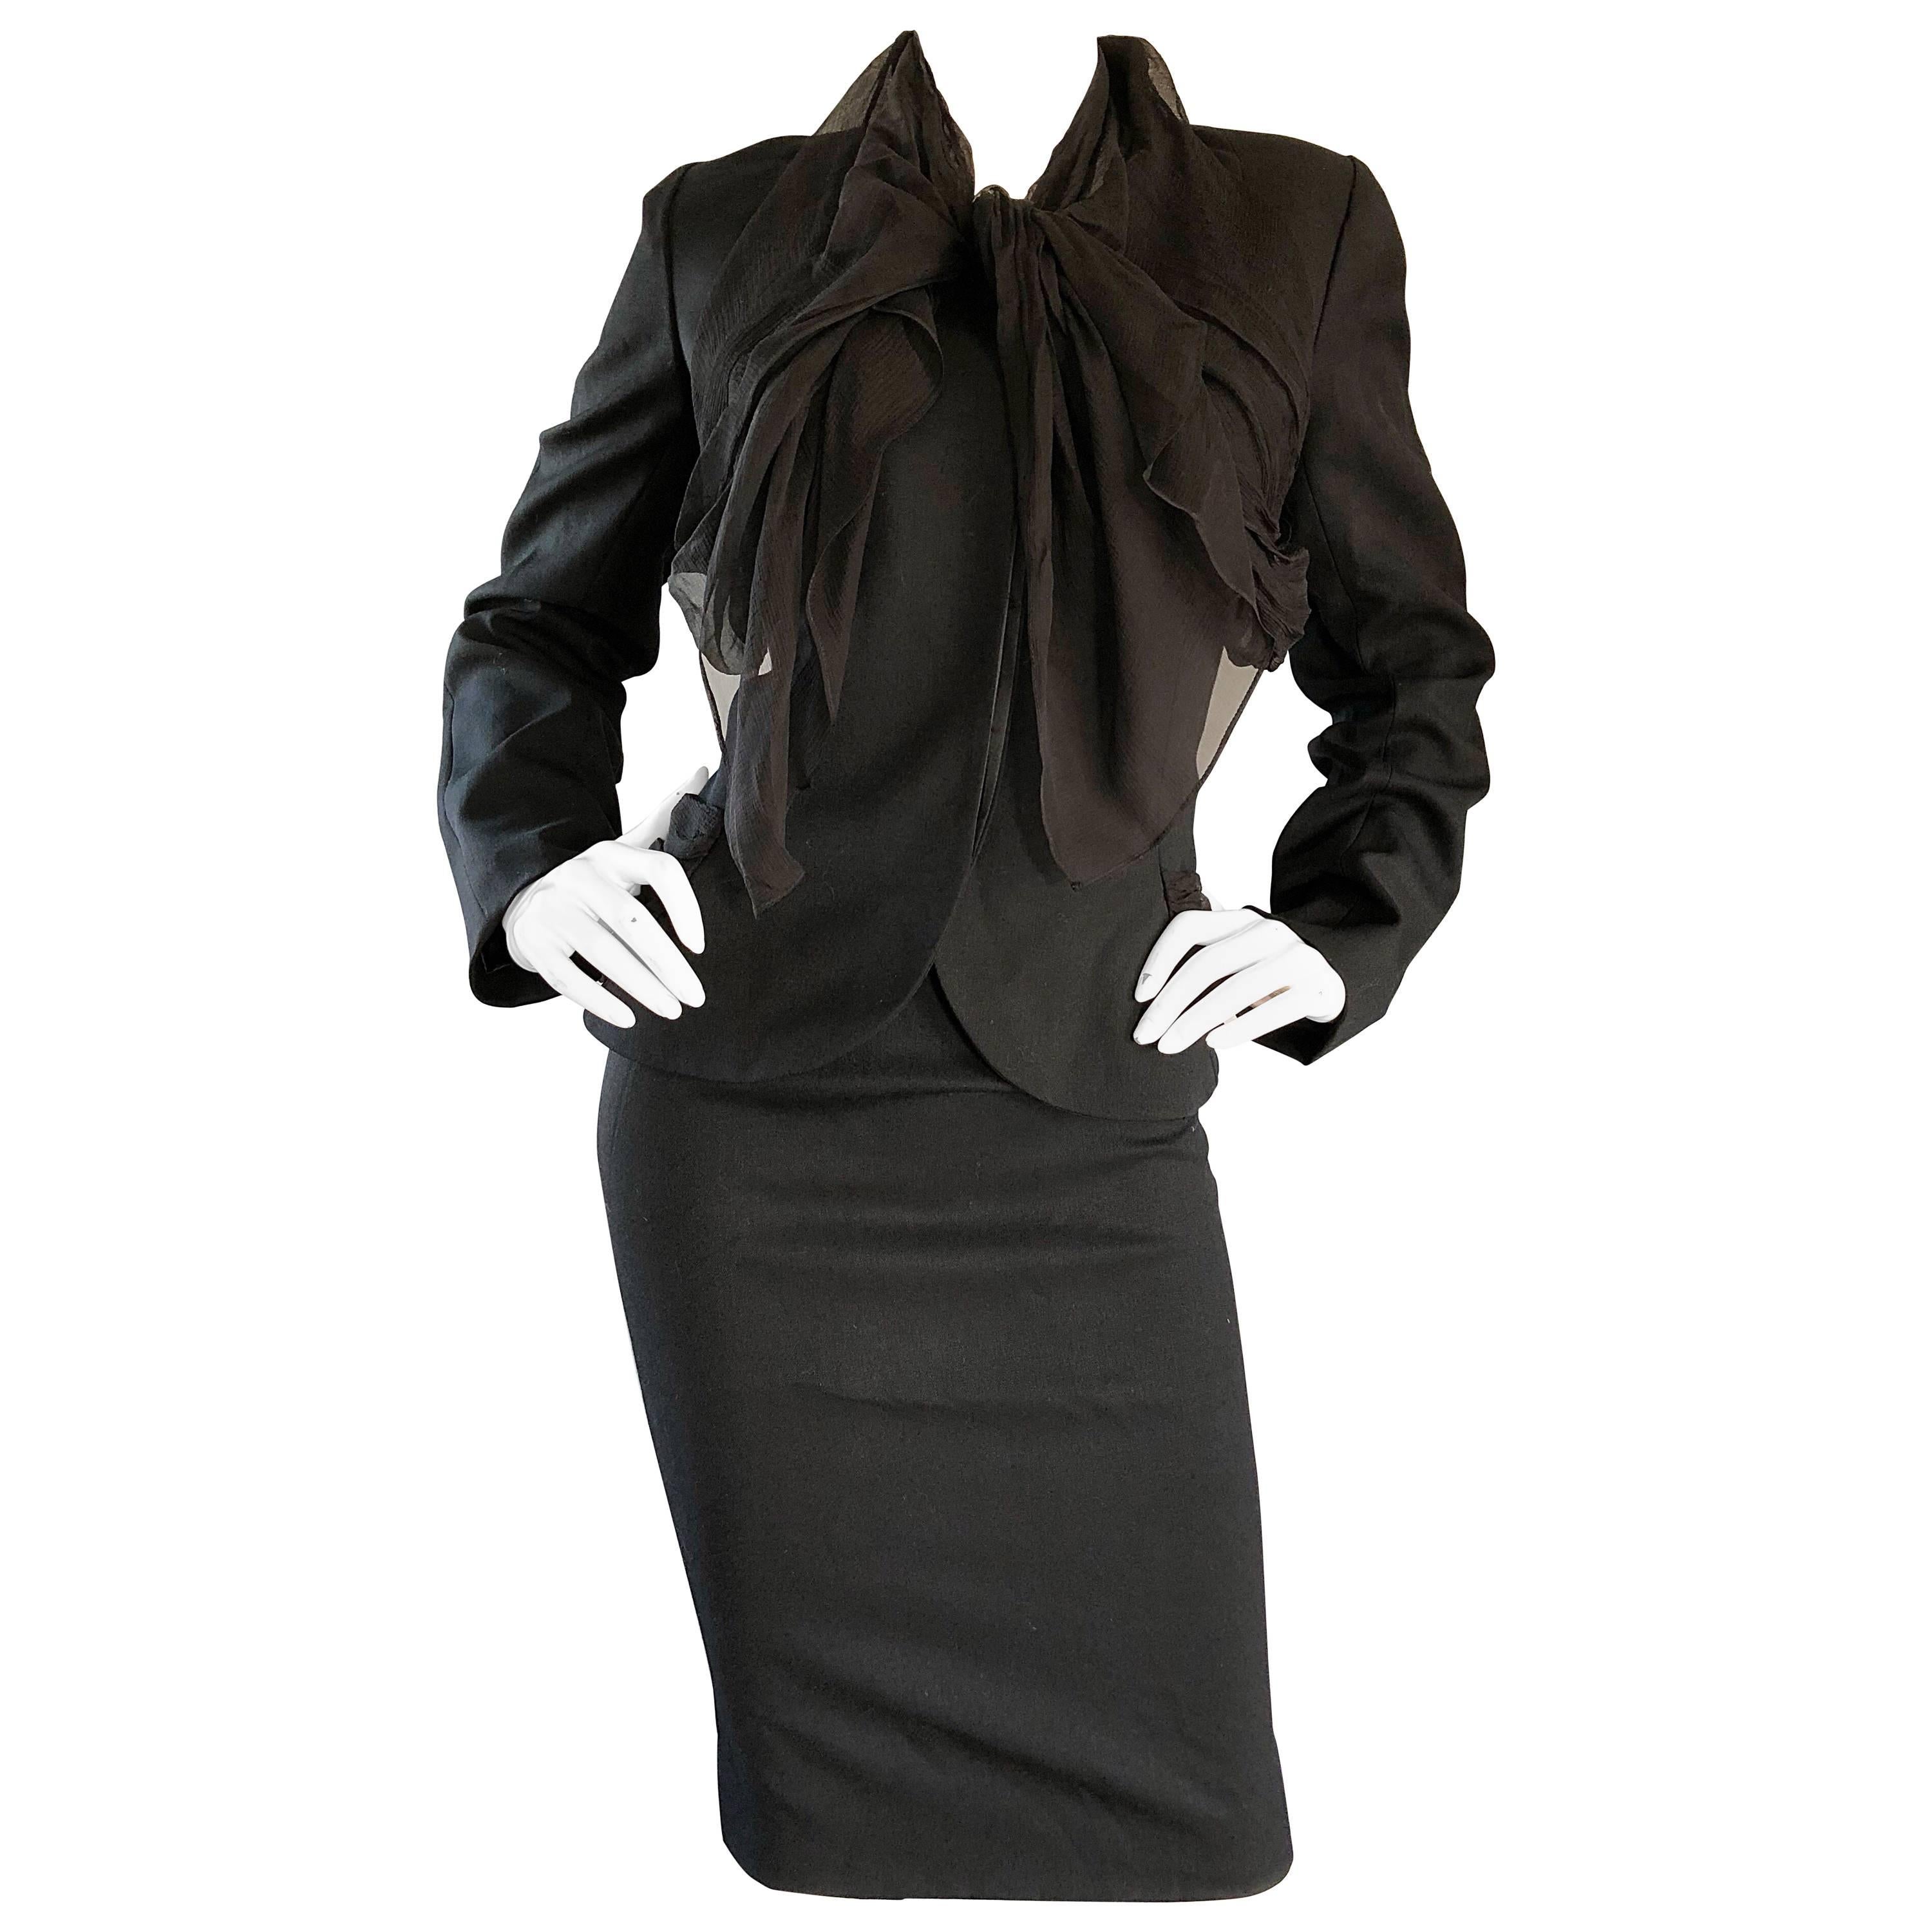 John Galliano Early 2000s Black Size 8 / 10 1940s Style Jacket Skirt Suit